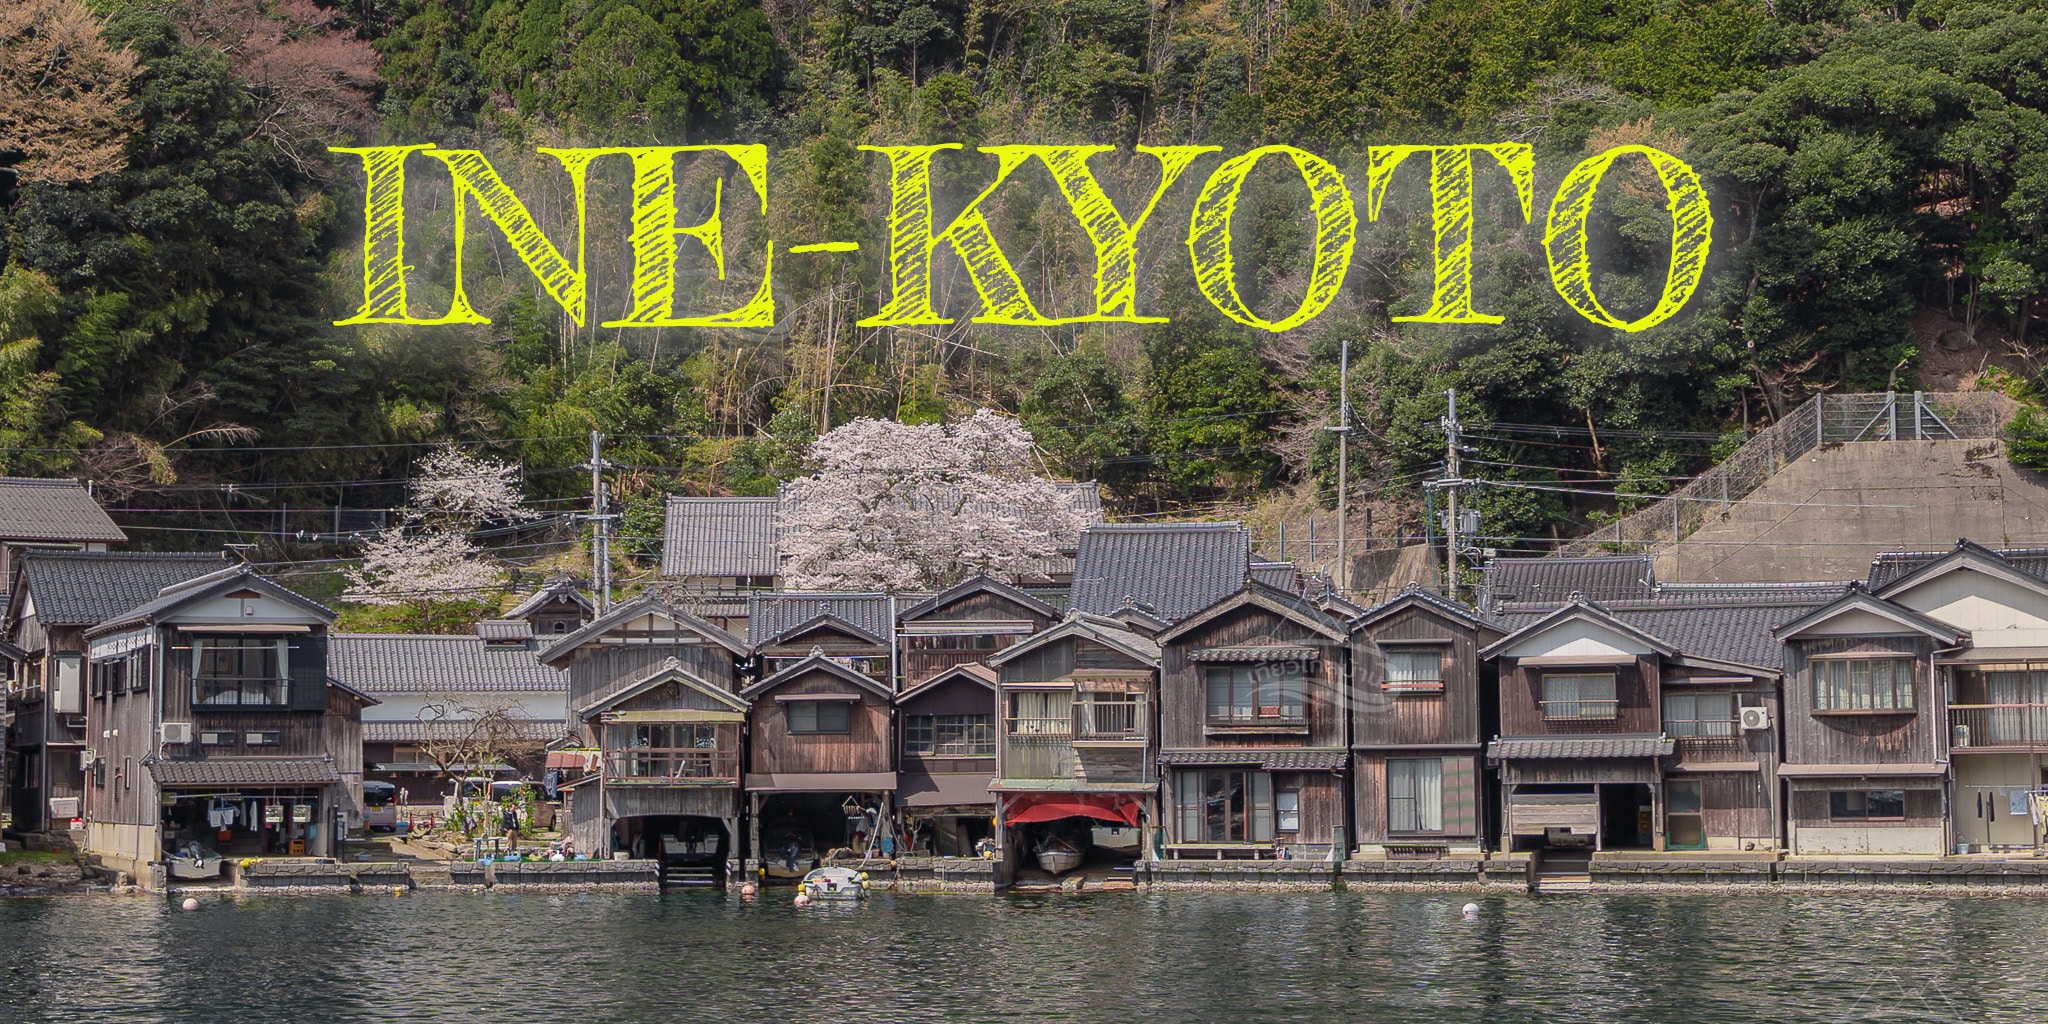 ine-kyoto-japan